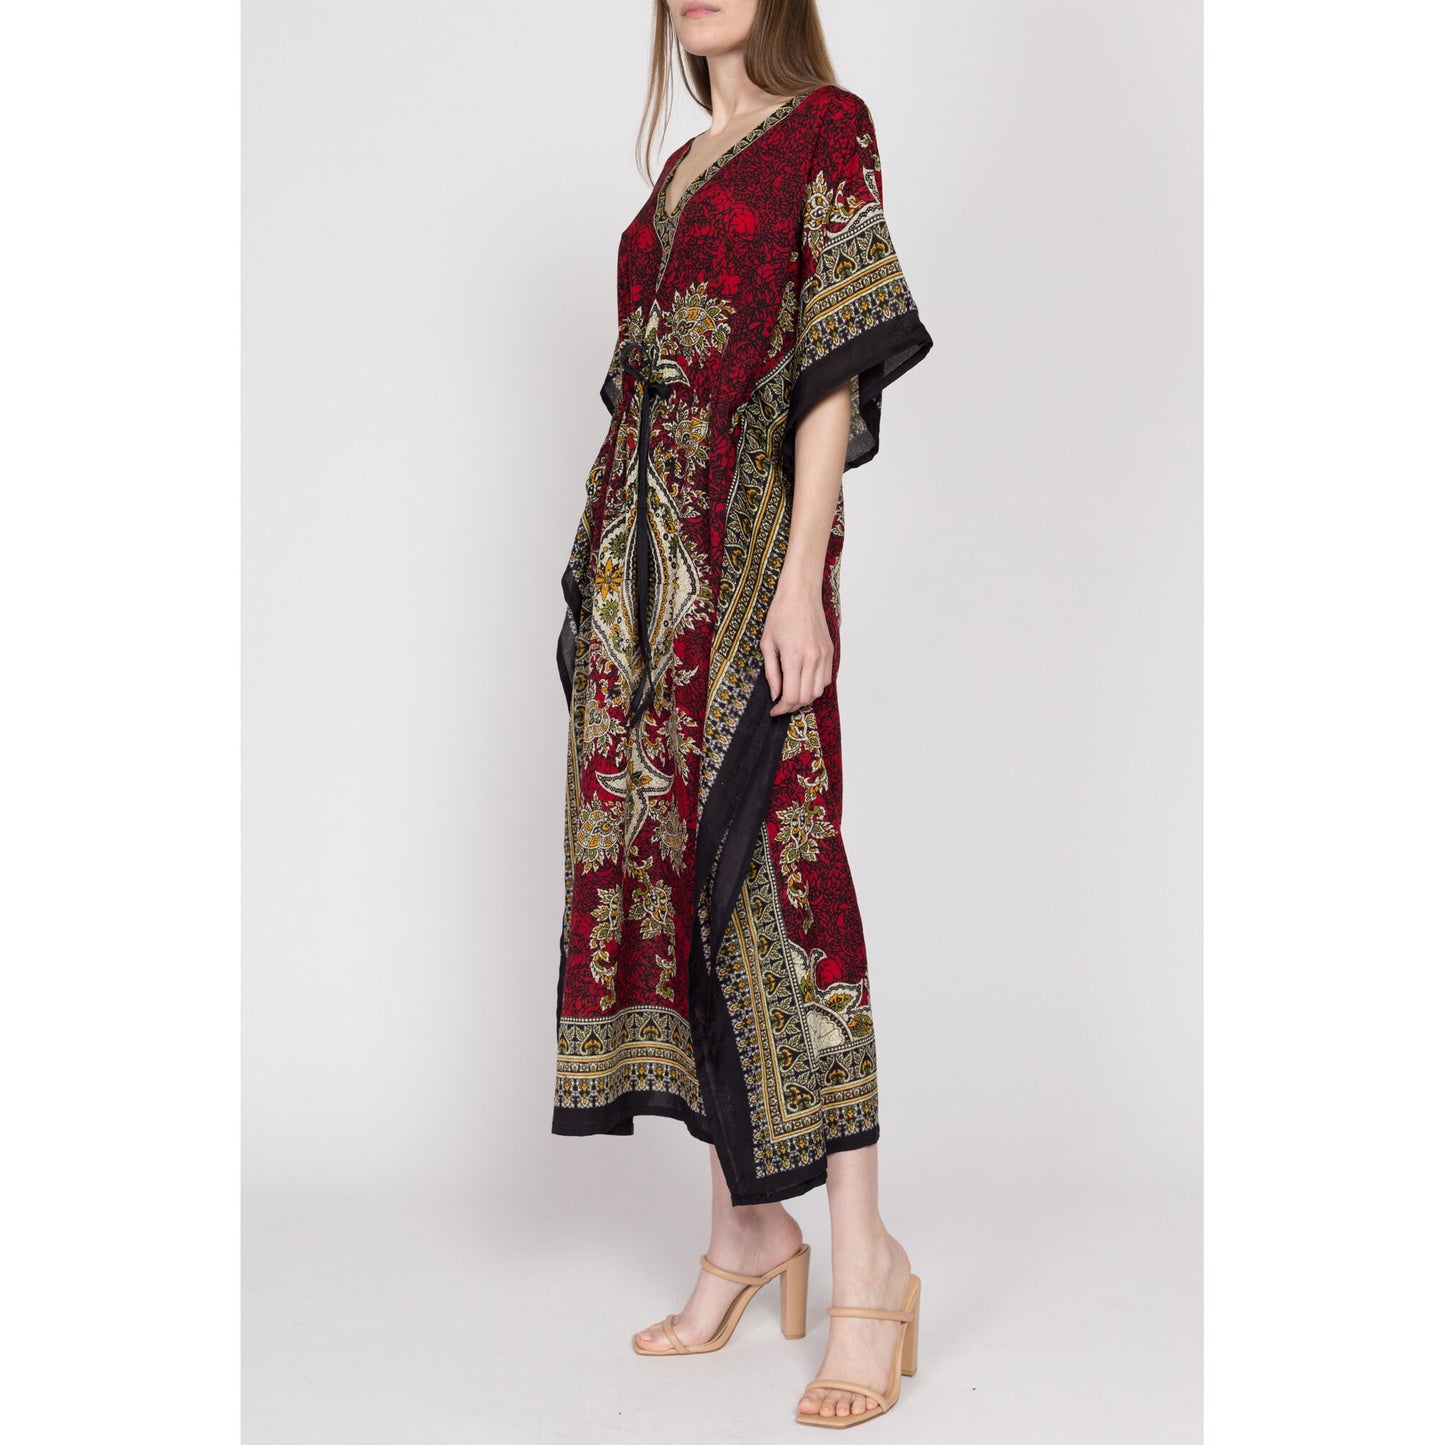 One Size - 70s Boho Red Abstract Print Kaftan Dress | Vintage Maxi Hippie Loungewear Caftan